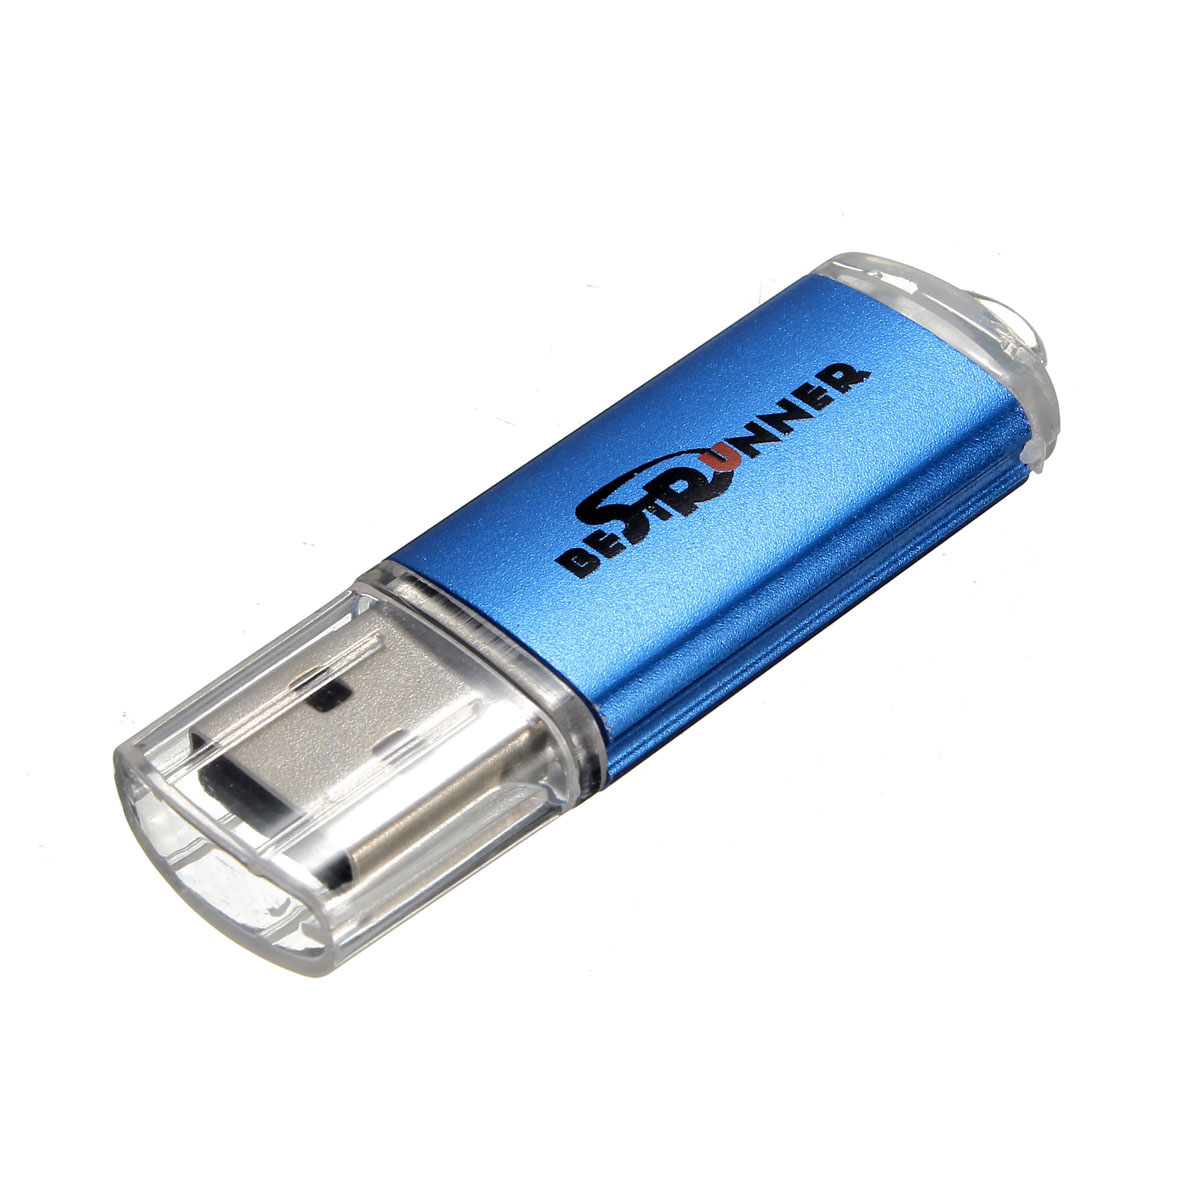 Bestrunner-Multi-Color-Portable-USB-20-1GB960M-Pendrive-USB-Disk-for-Macbook-Laptop-PC-1723018-8